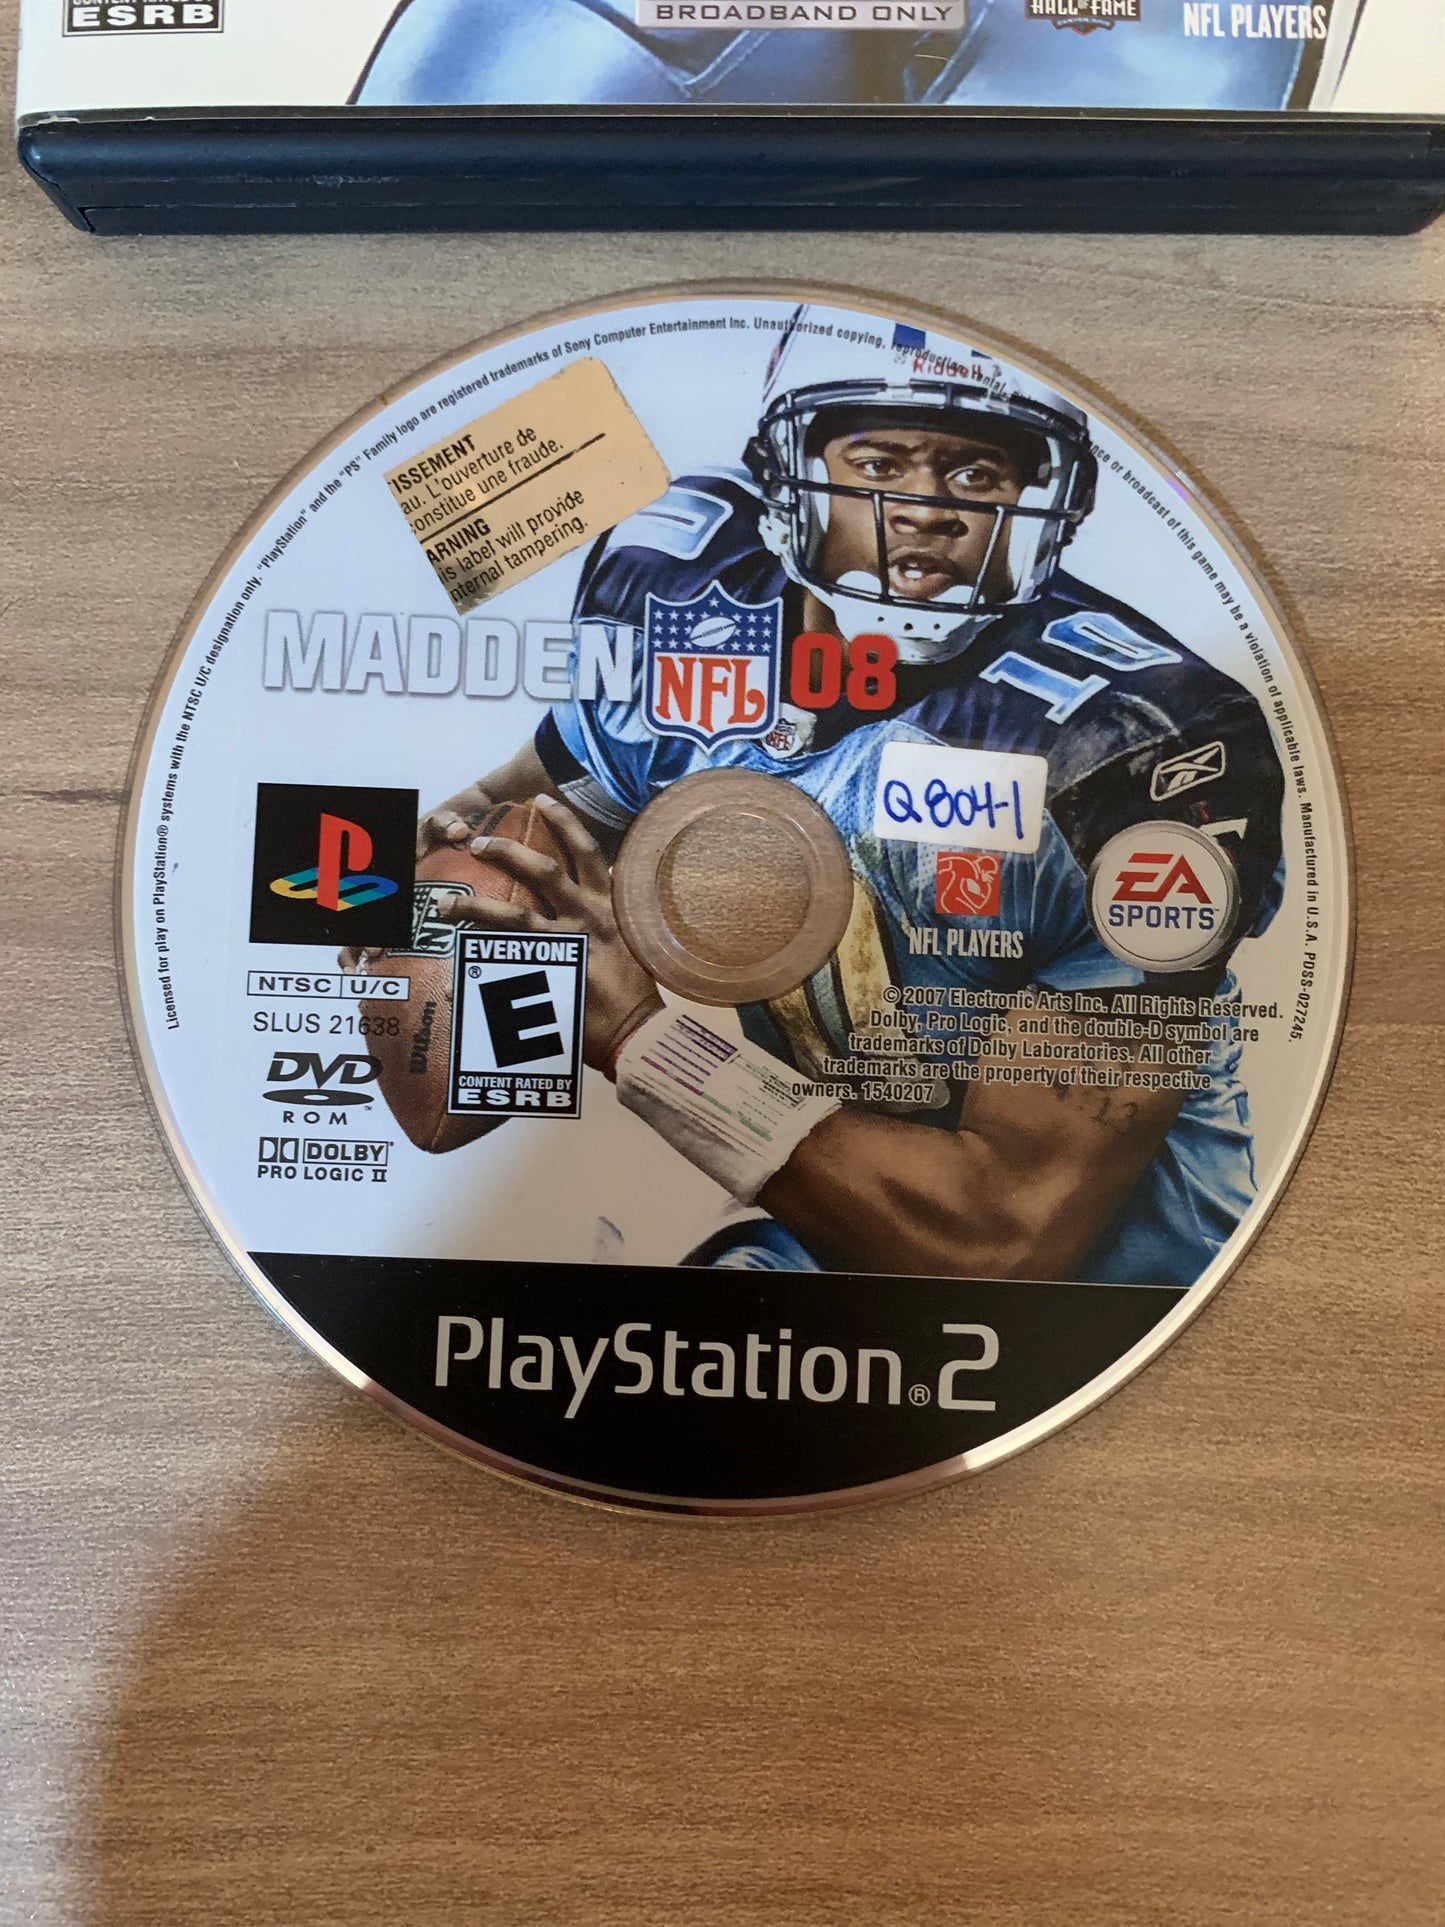 SONY PLAYSTATiON 2 [PS2] | MADDEN NFL 08